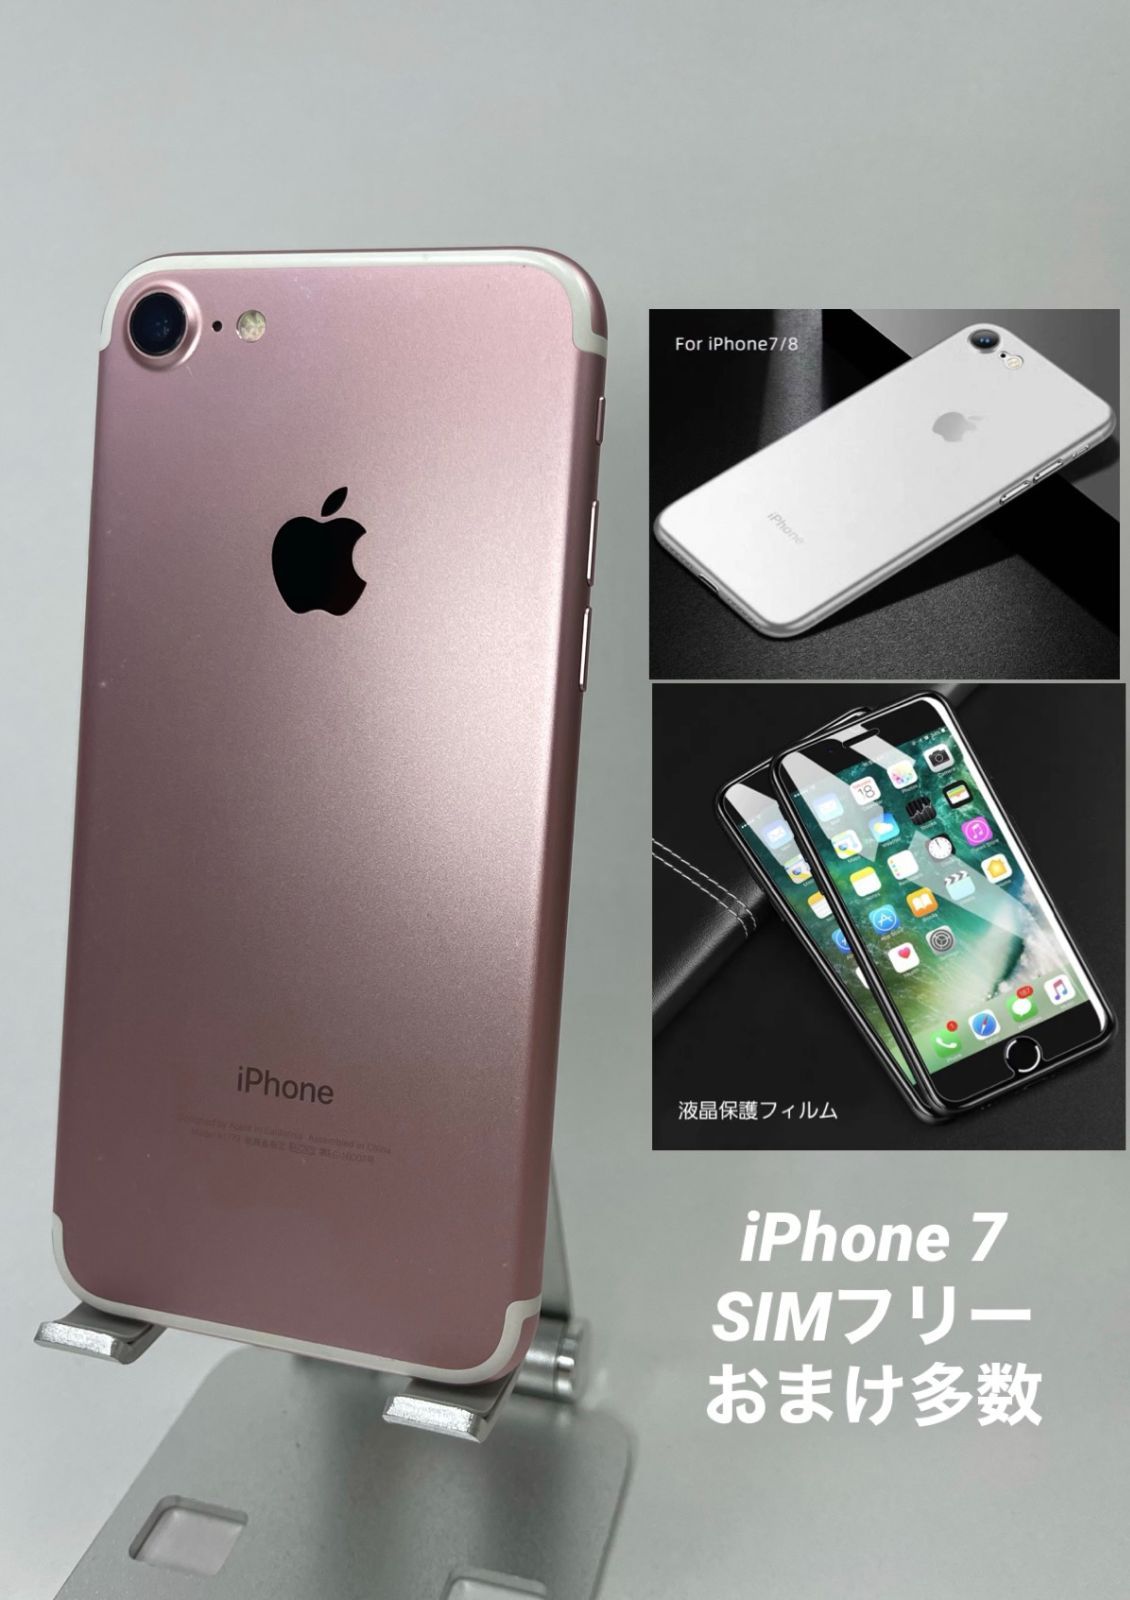 iPhone 7 シルバー 32GB - スマートフォン本体